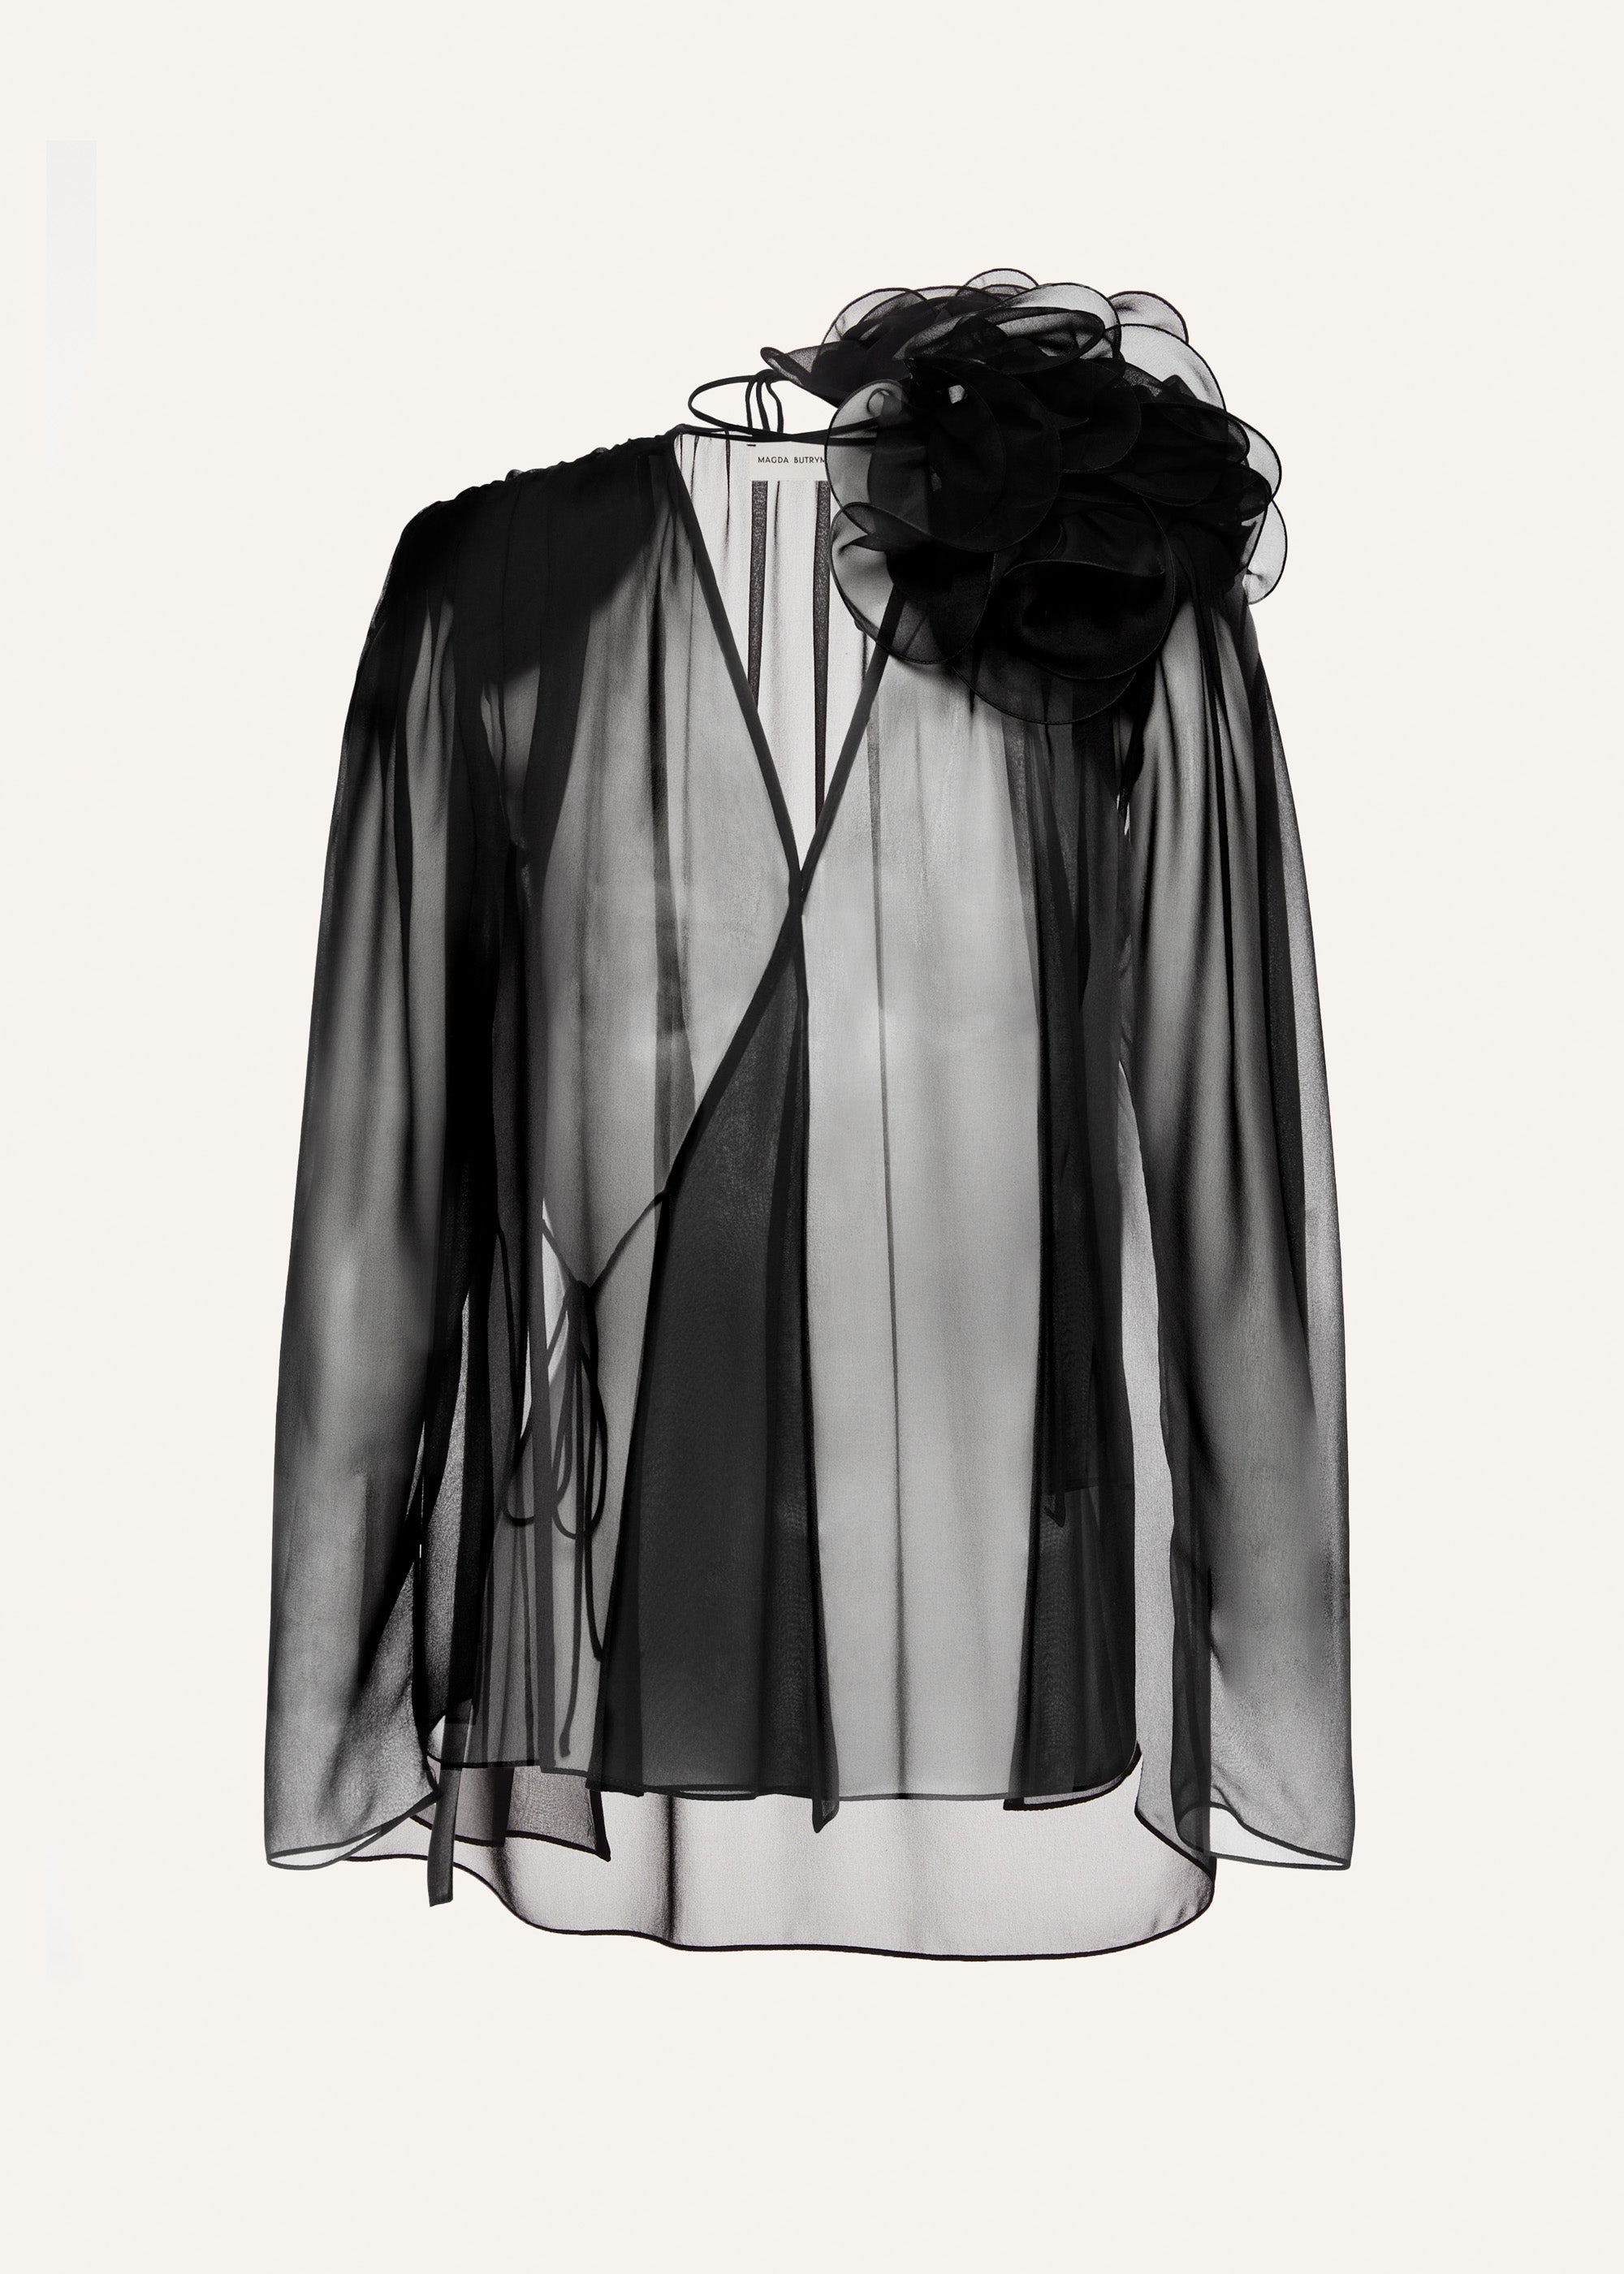 Butrym in shirred | blouse flower Classic black sheer Magda